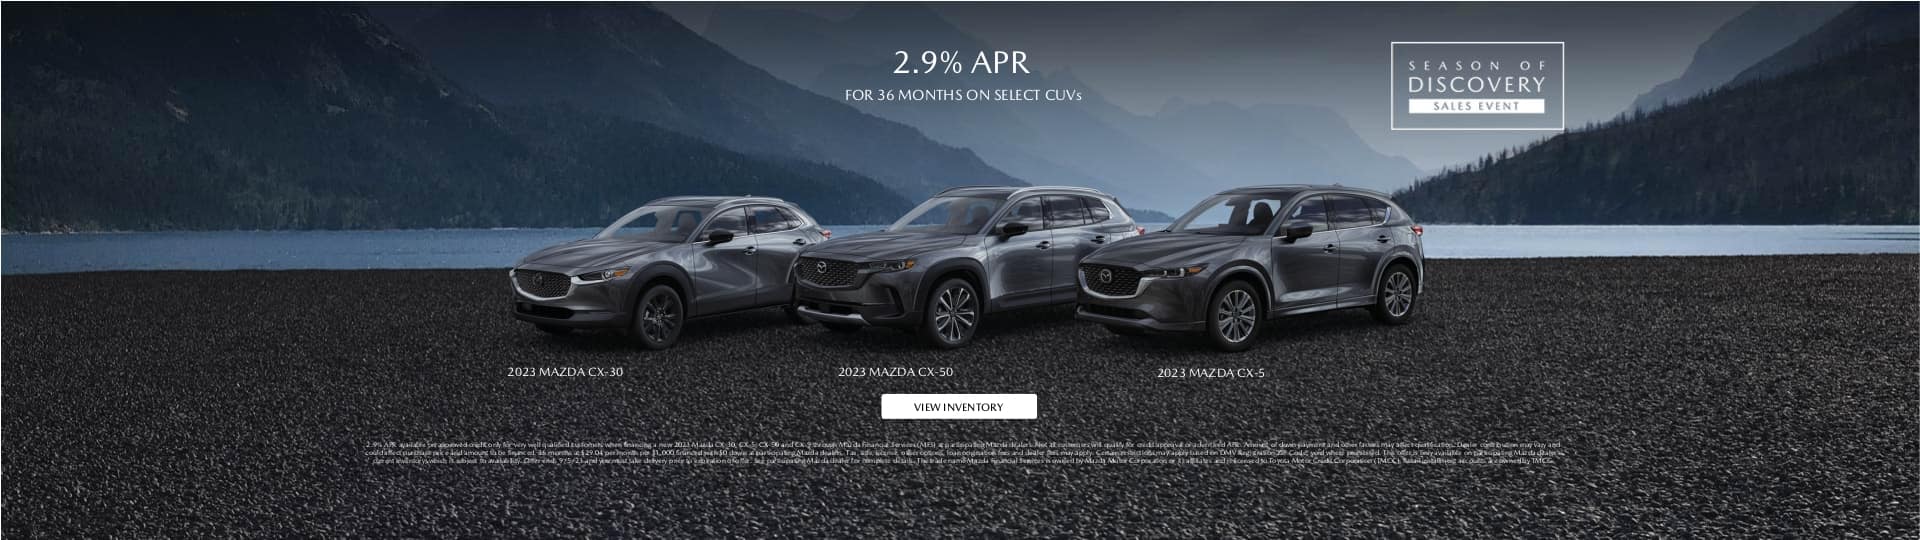 Mazda Season of Discovery